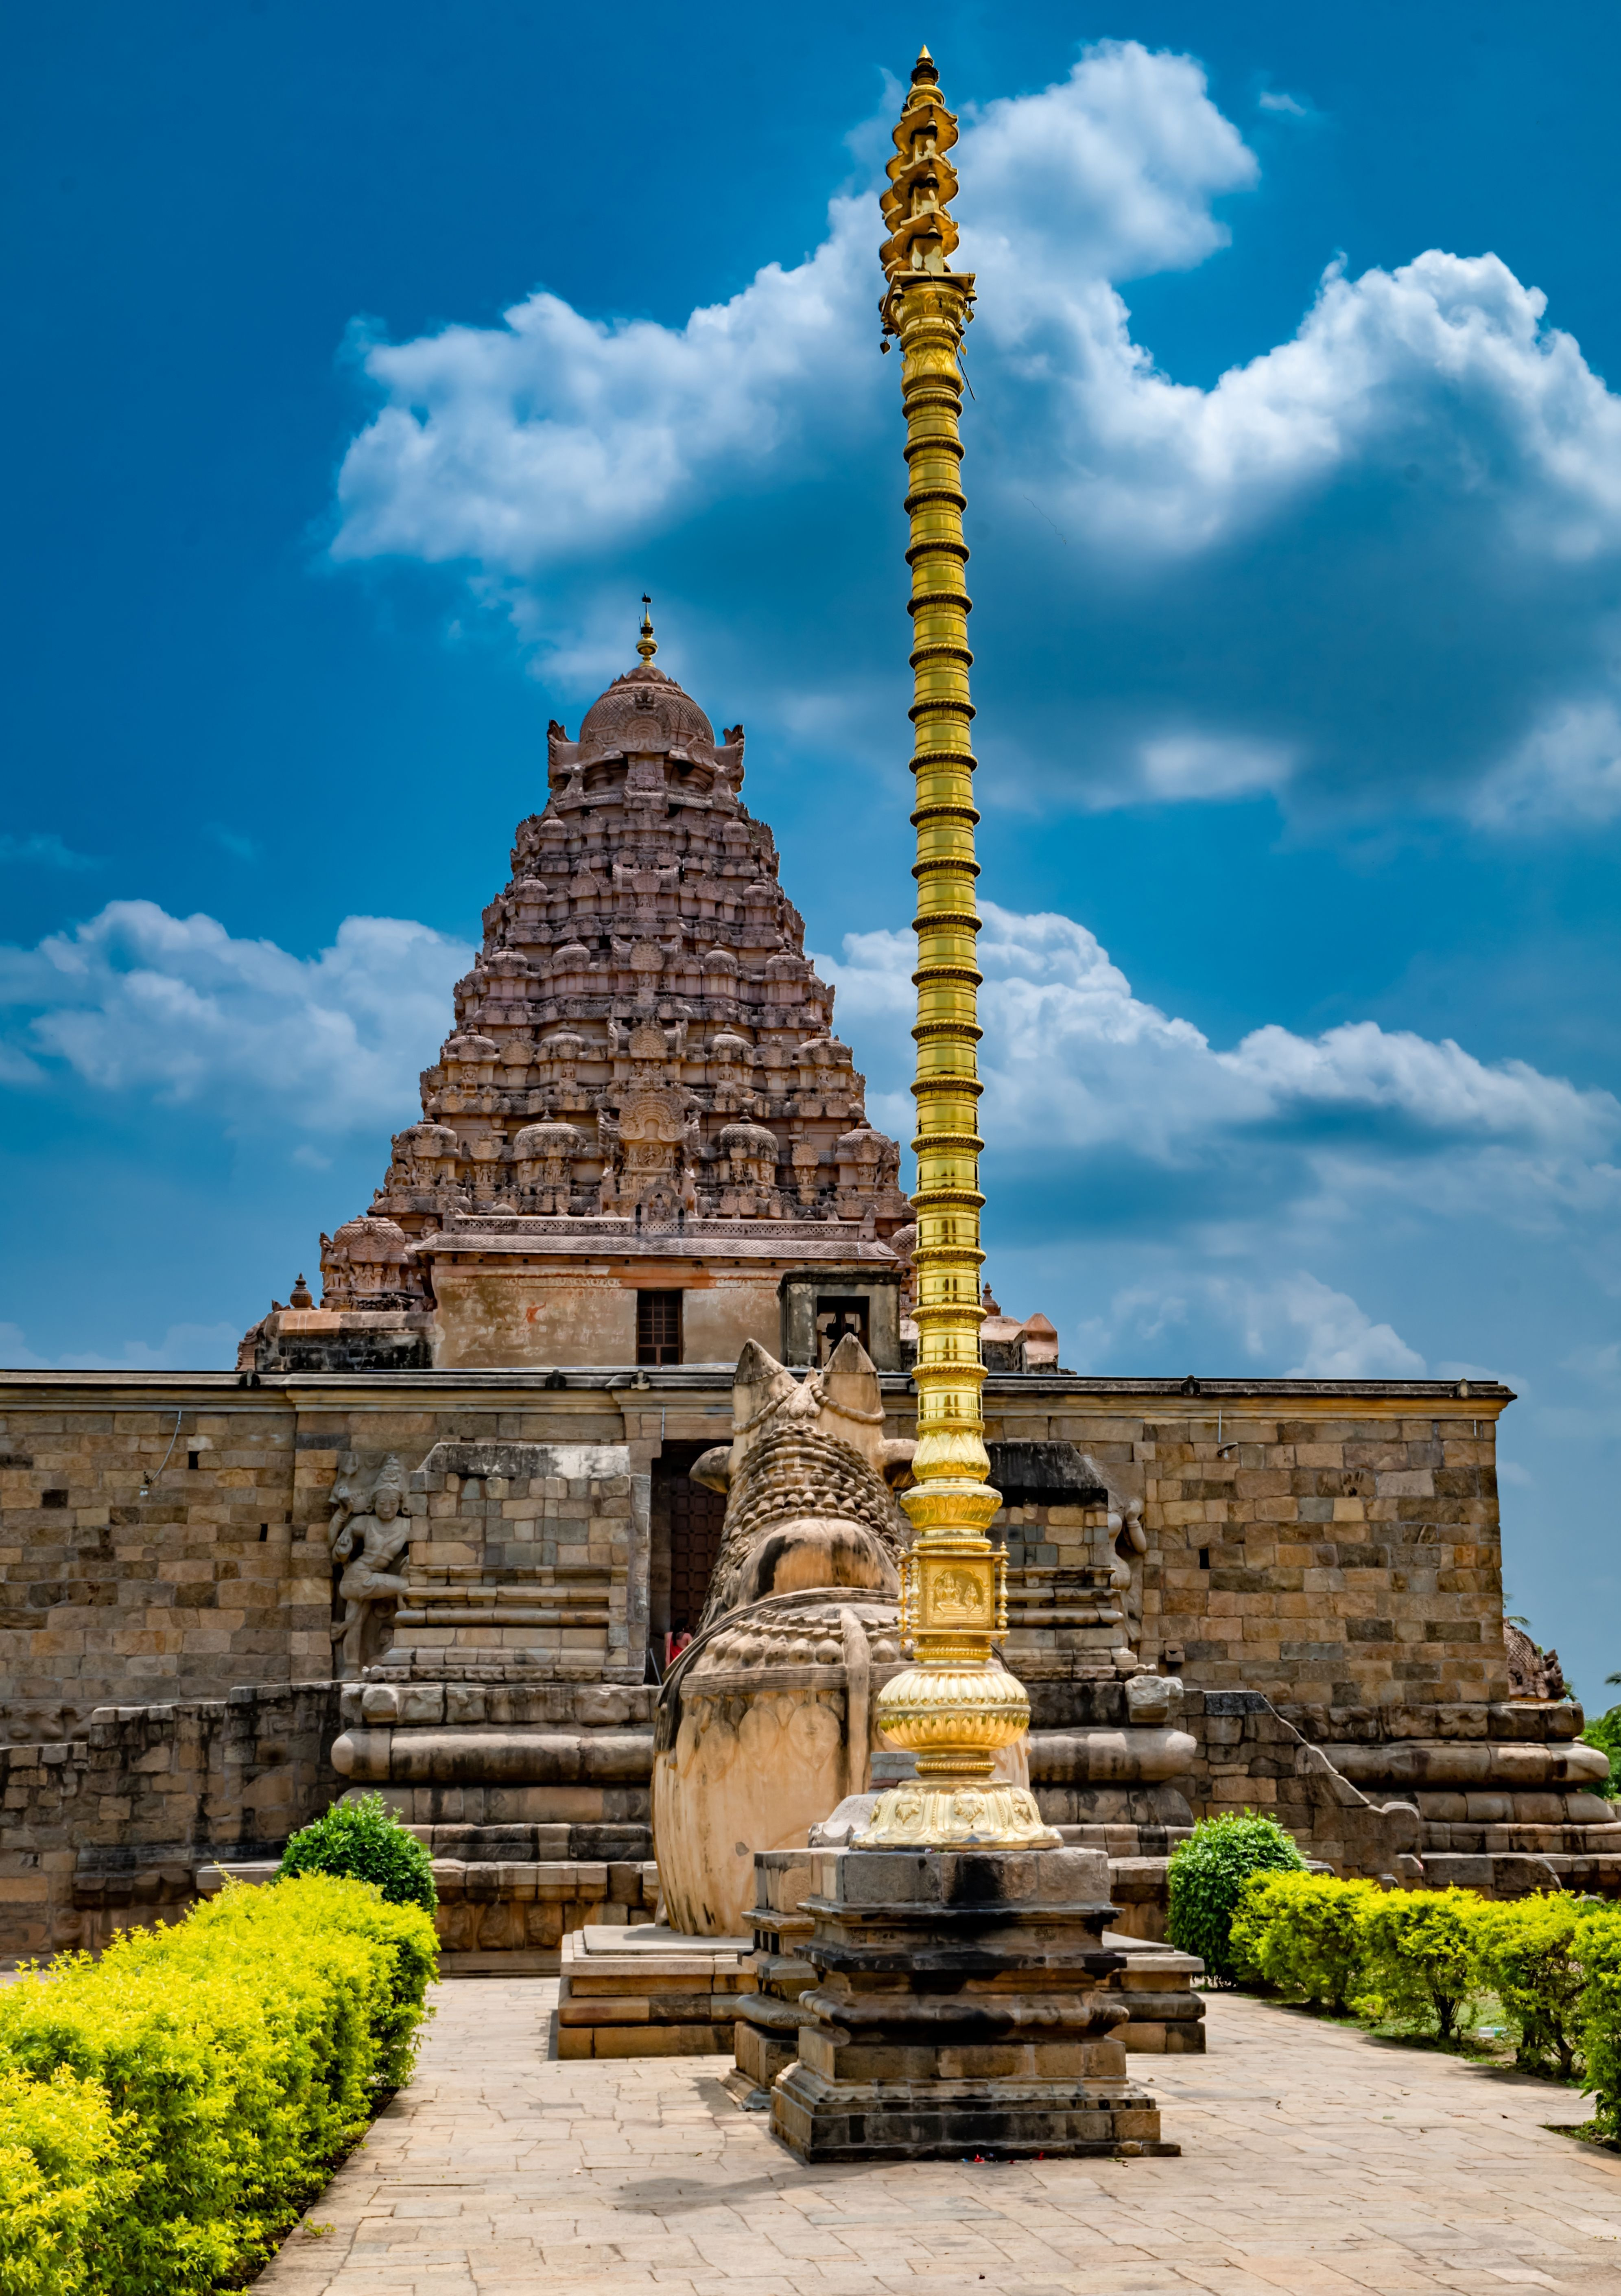 Great Hindu architecture in Gangaikonda Chola Puram temple, South India.